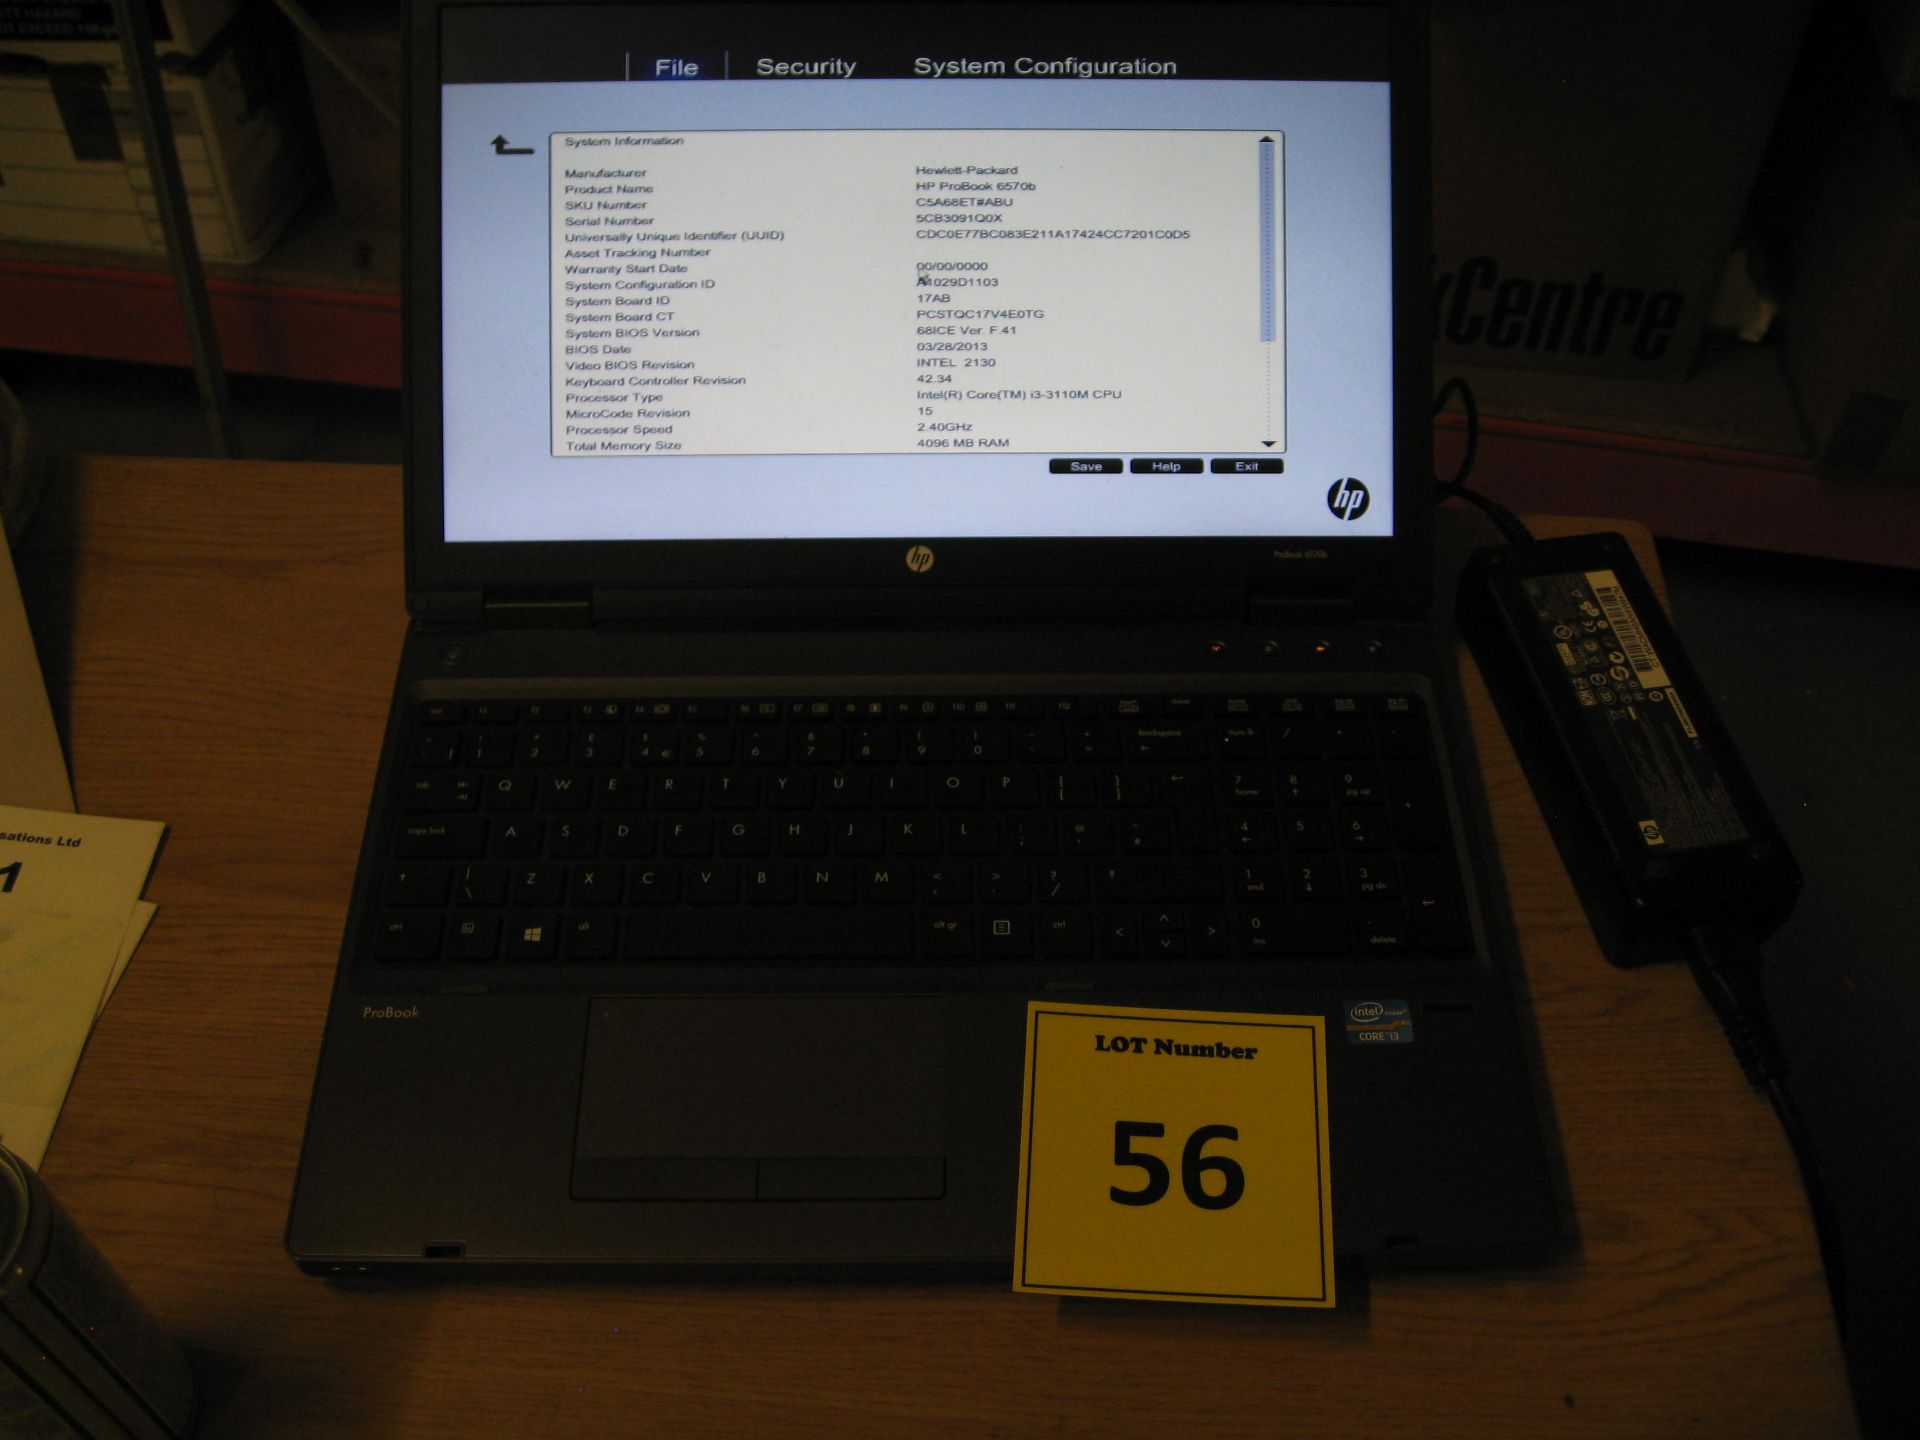 HP Probook 6570b Laptop, Core-i3/2.40GHZ, 4gb RAM/320gb HDD, dvdrw, psu - Win 8 Pro sticker